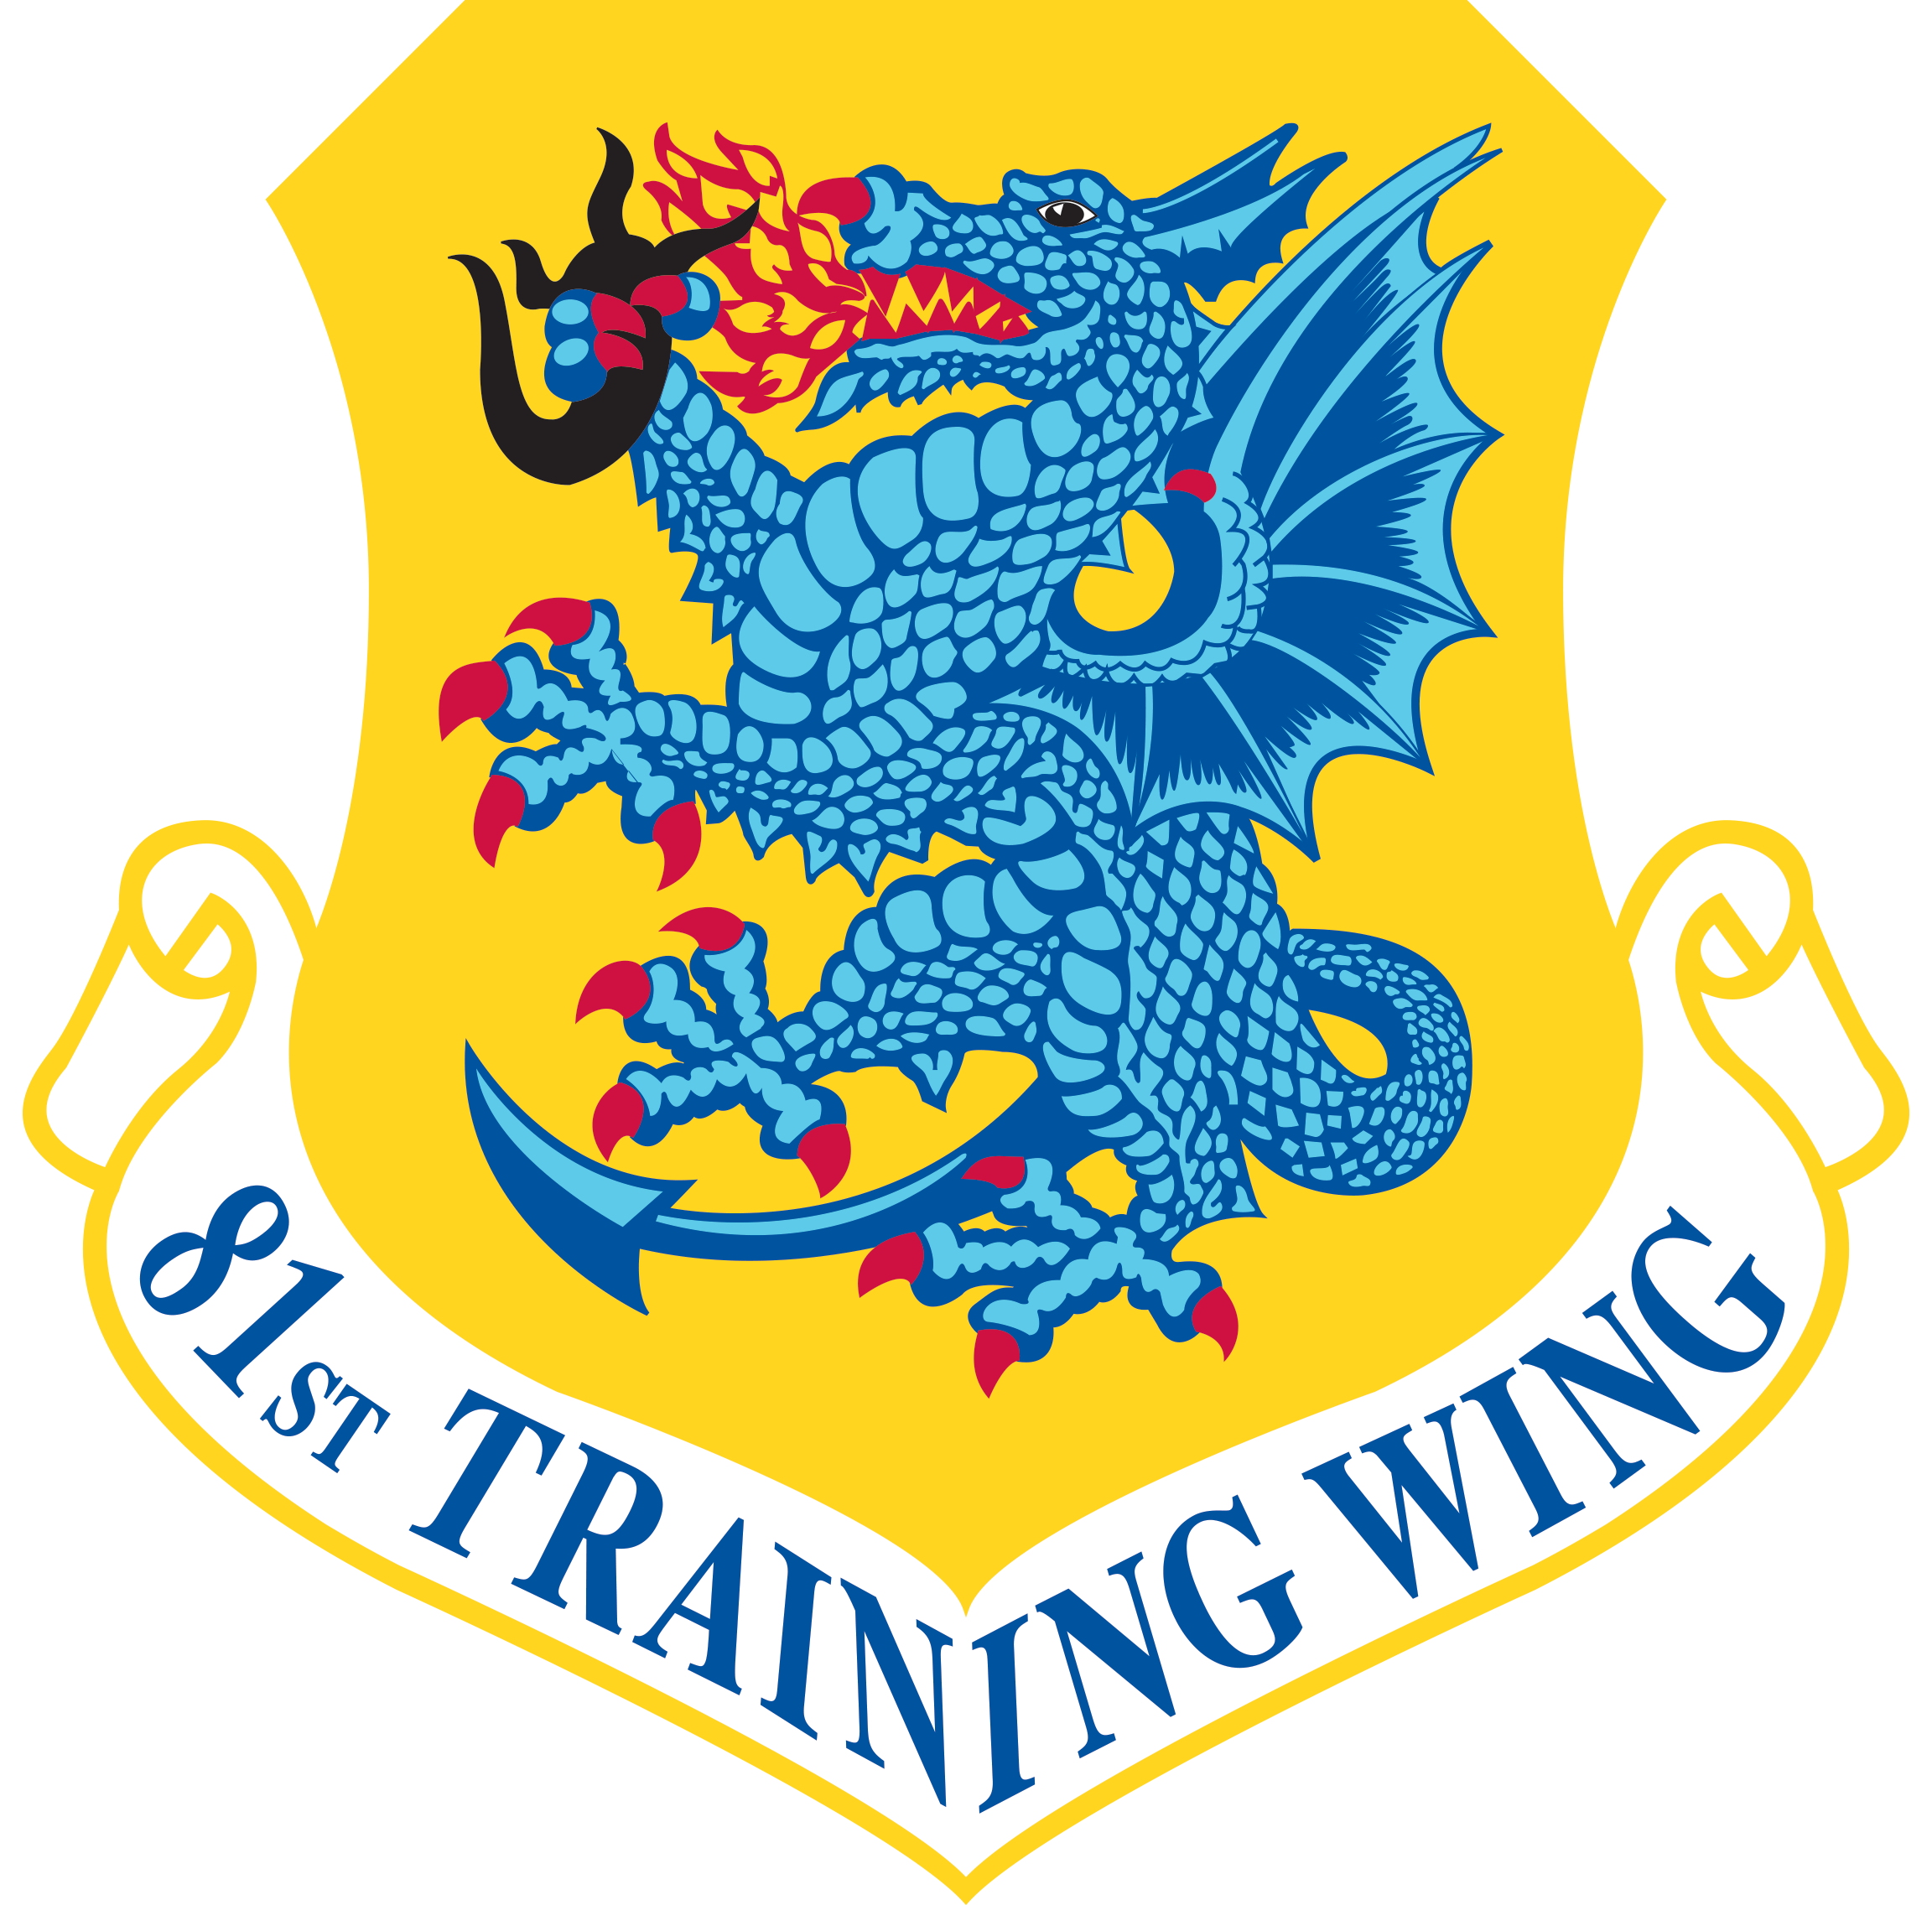 81st Training Wing shield